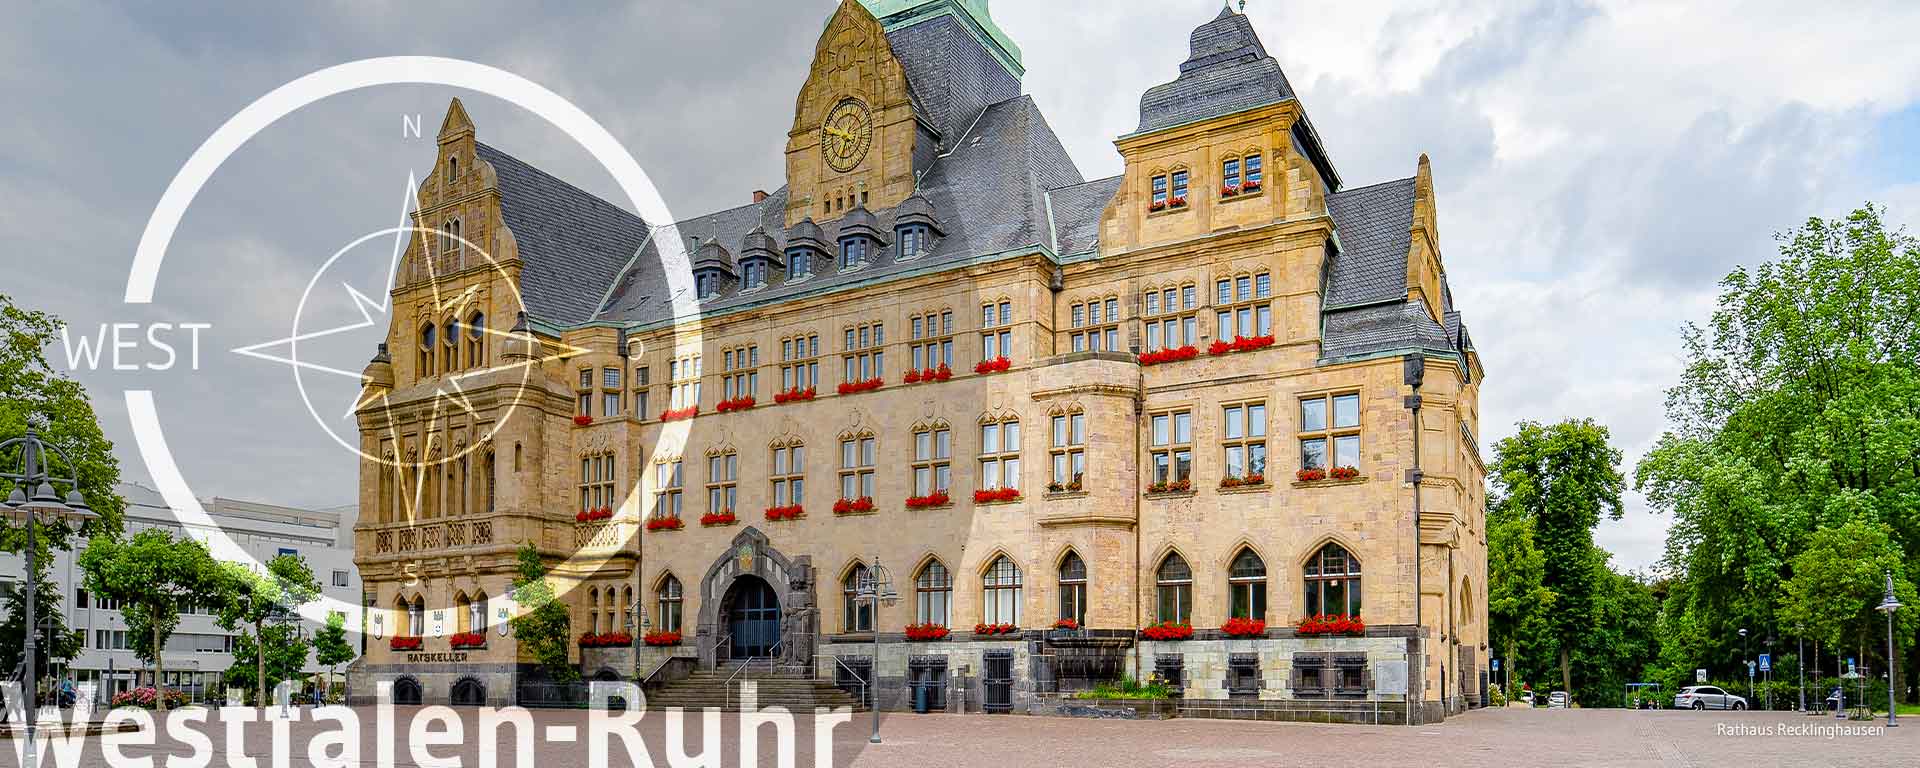 Baustoffrecyclingexperte in Westfalen-Ruhr: REMEX